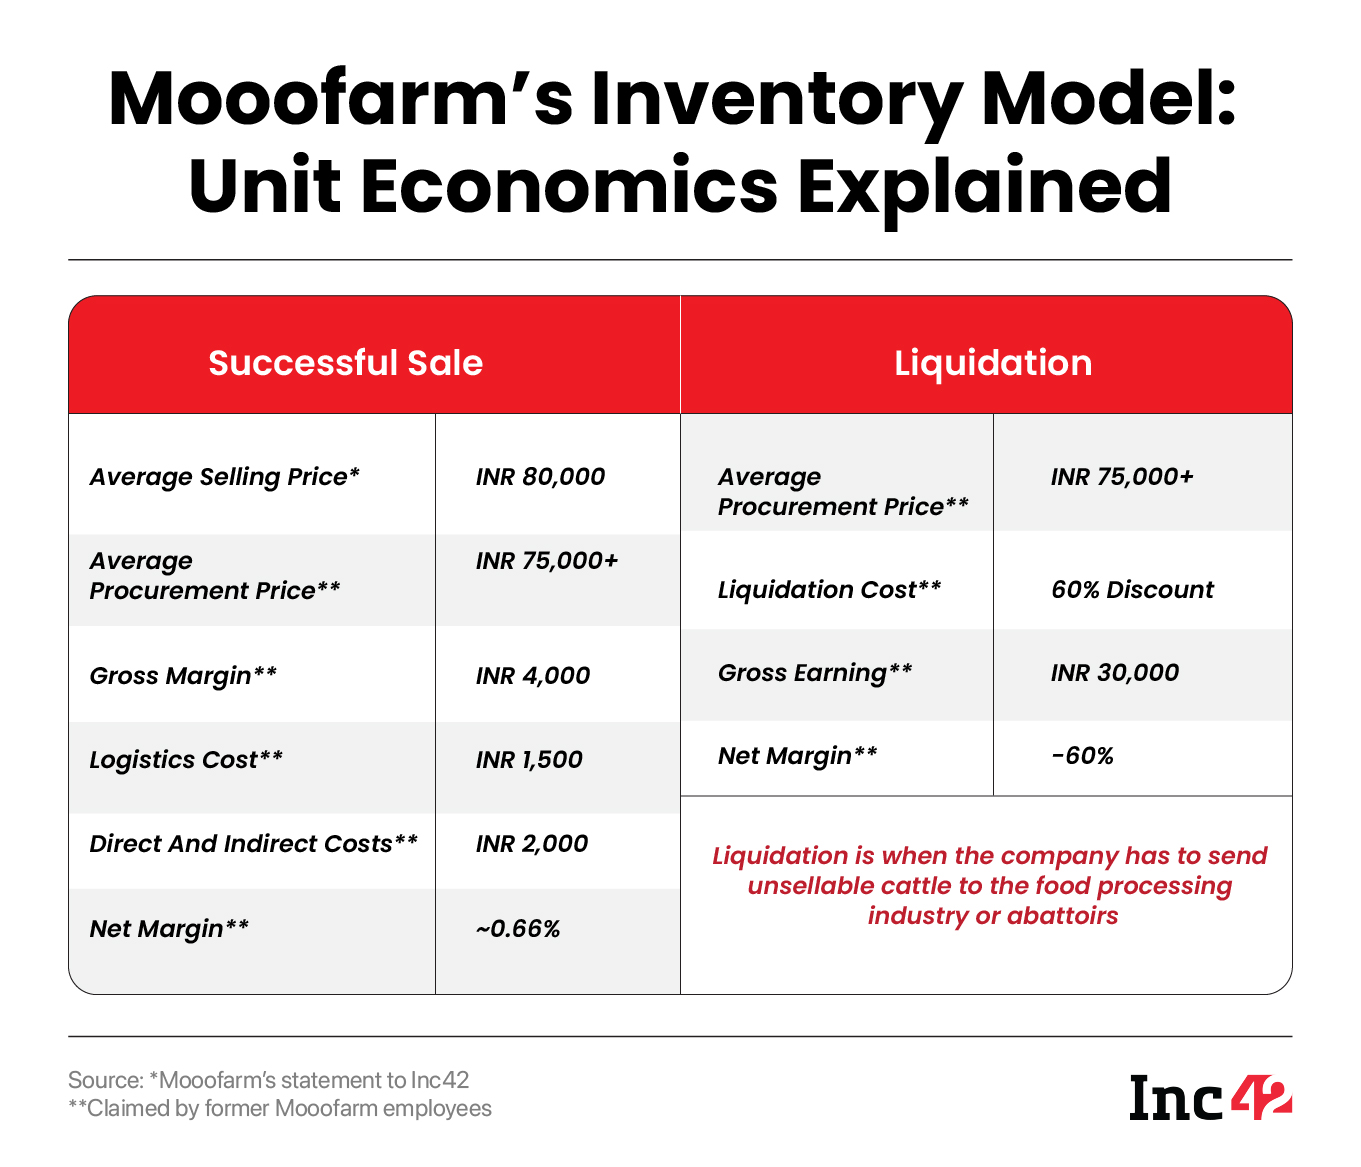 Mooofarm inventory model had severe unit economics challenges